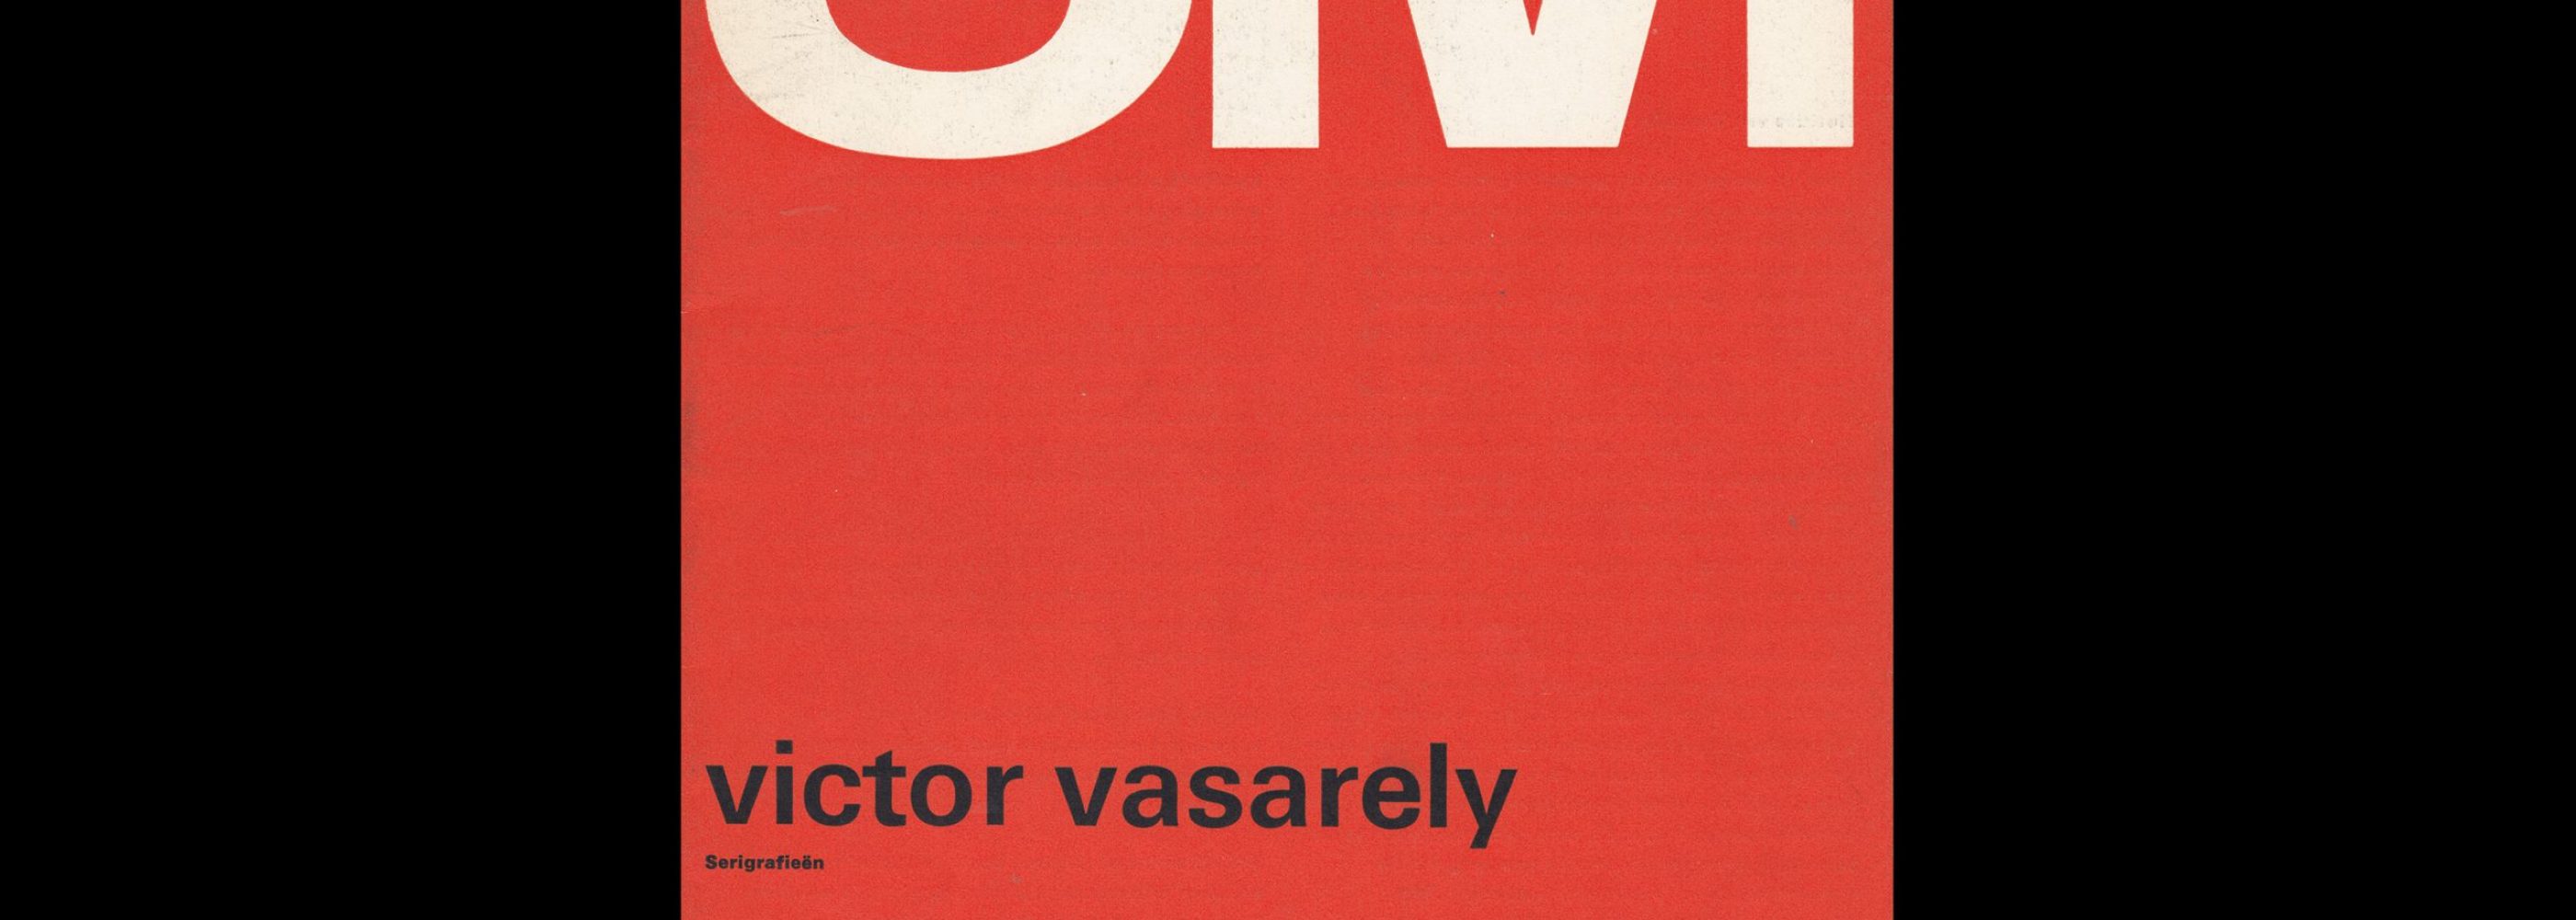 Victor Vasarely, Stedelijk Museum, Amsterdam, 1967. Designed by Wim Crouwel and Josje Pollmann (Total Design)